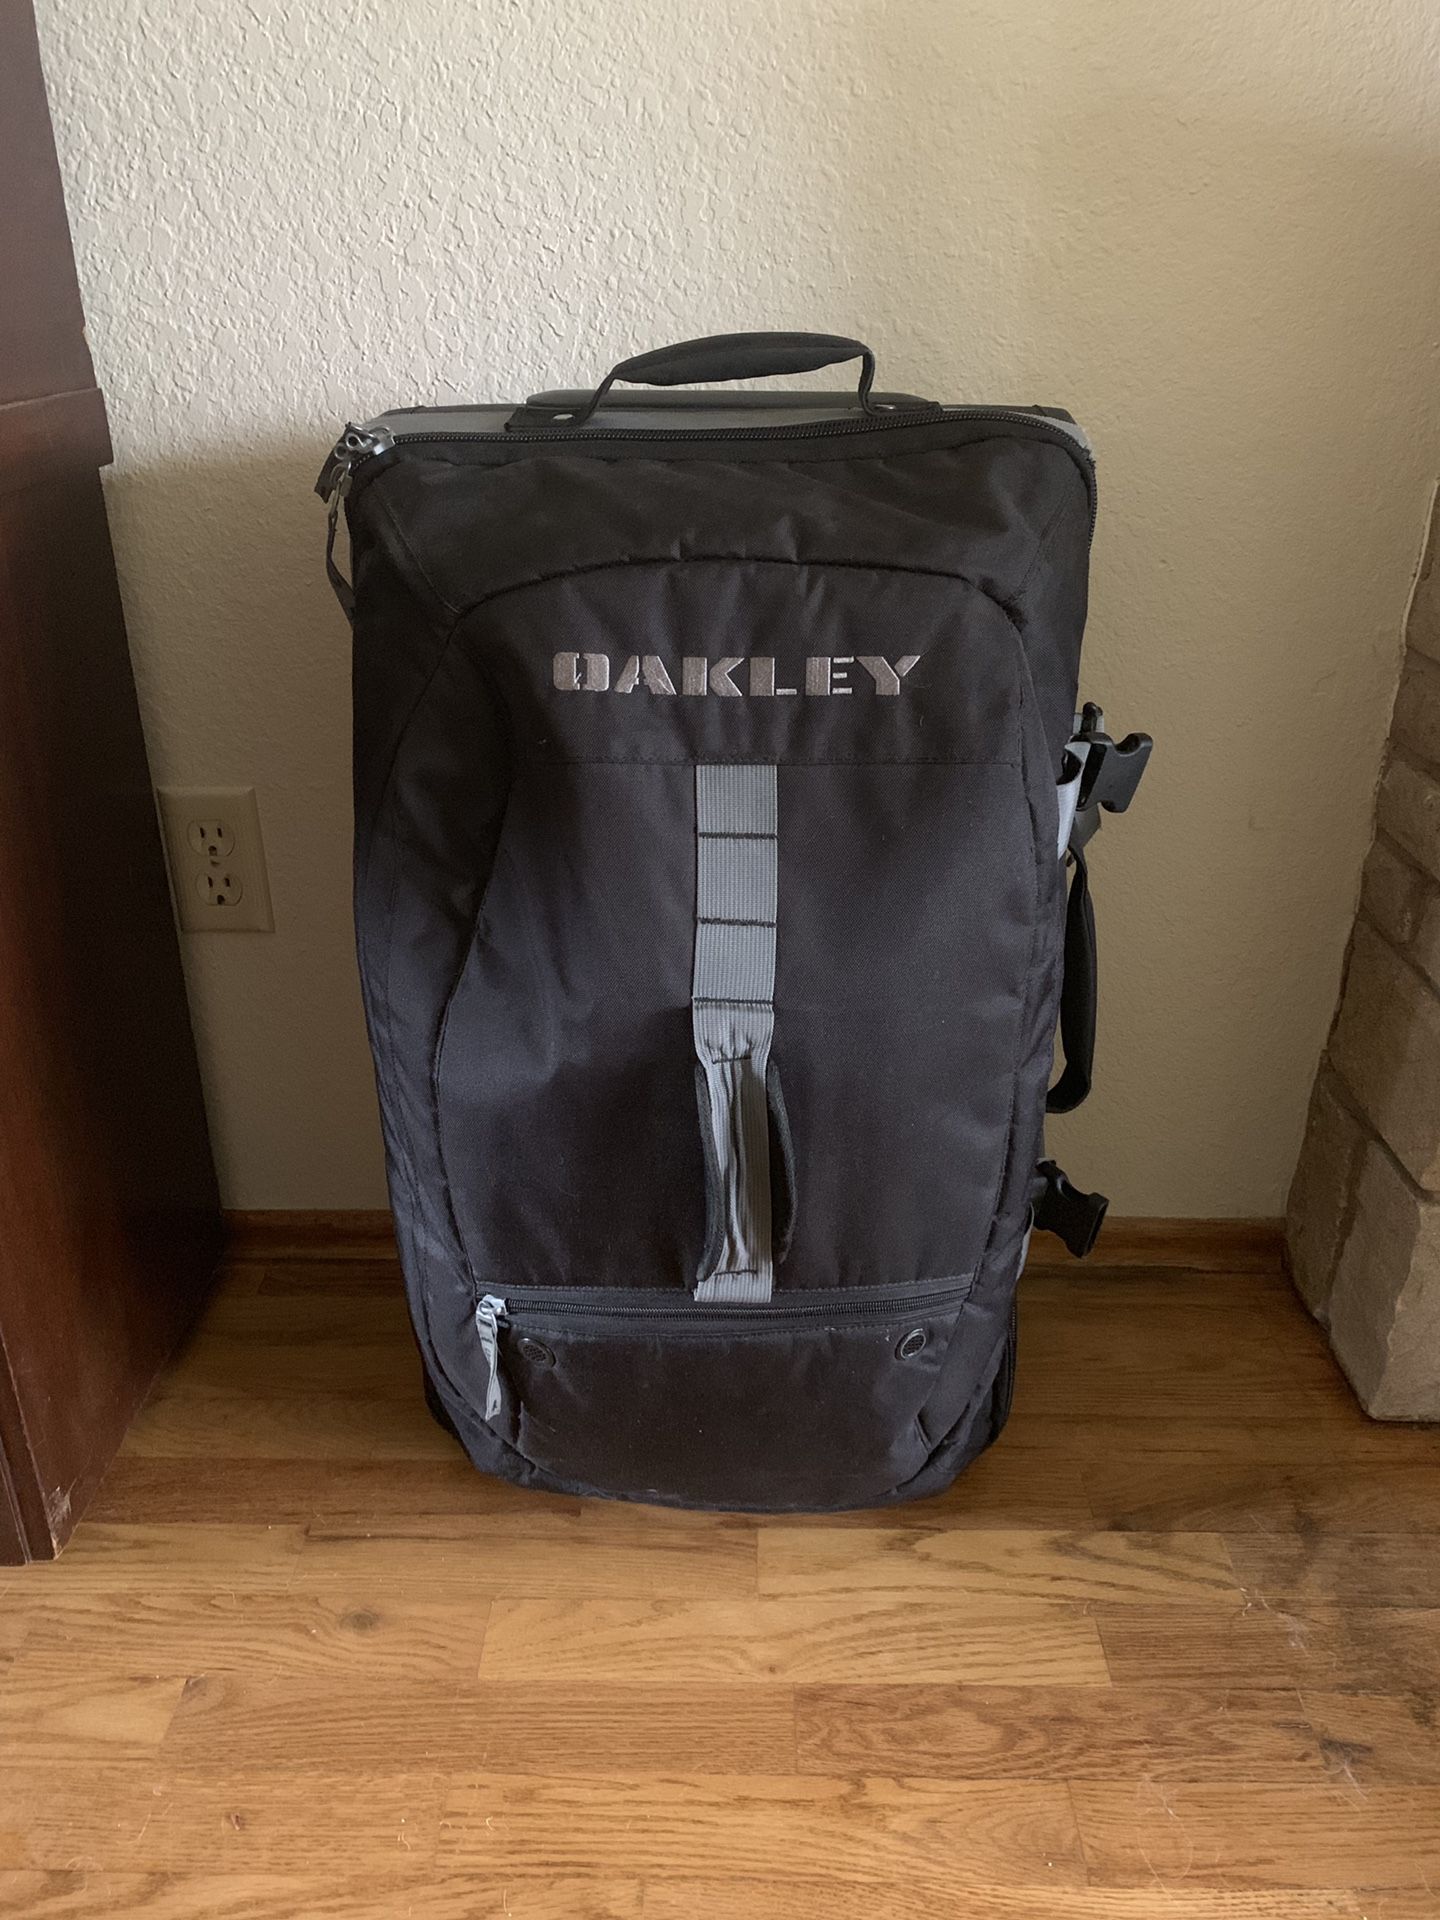 Oakley Rolling Duffle bag / Suitcase